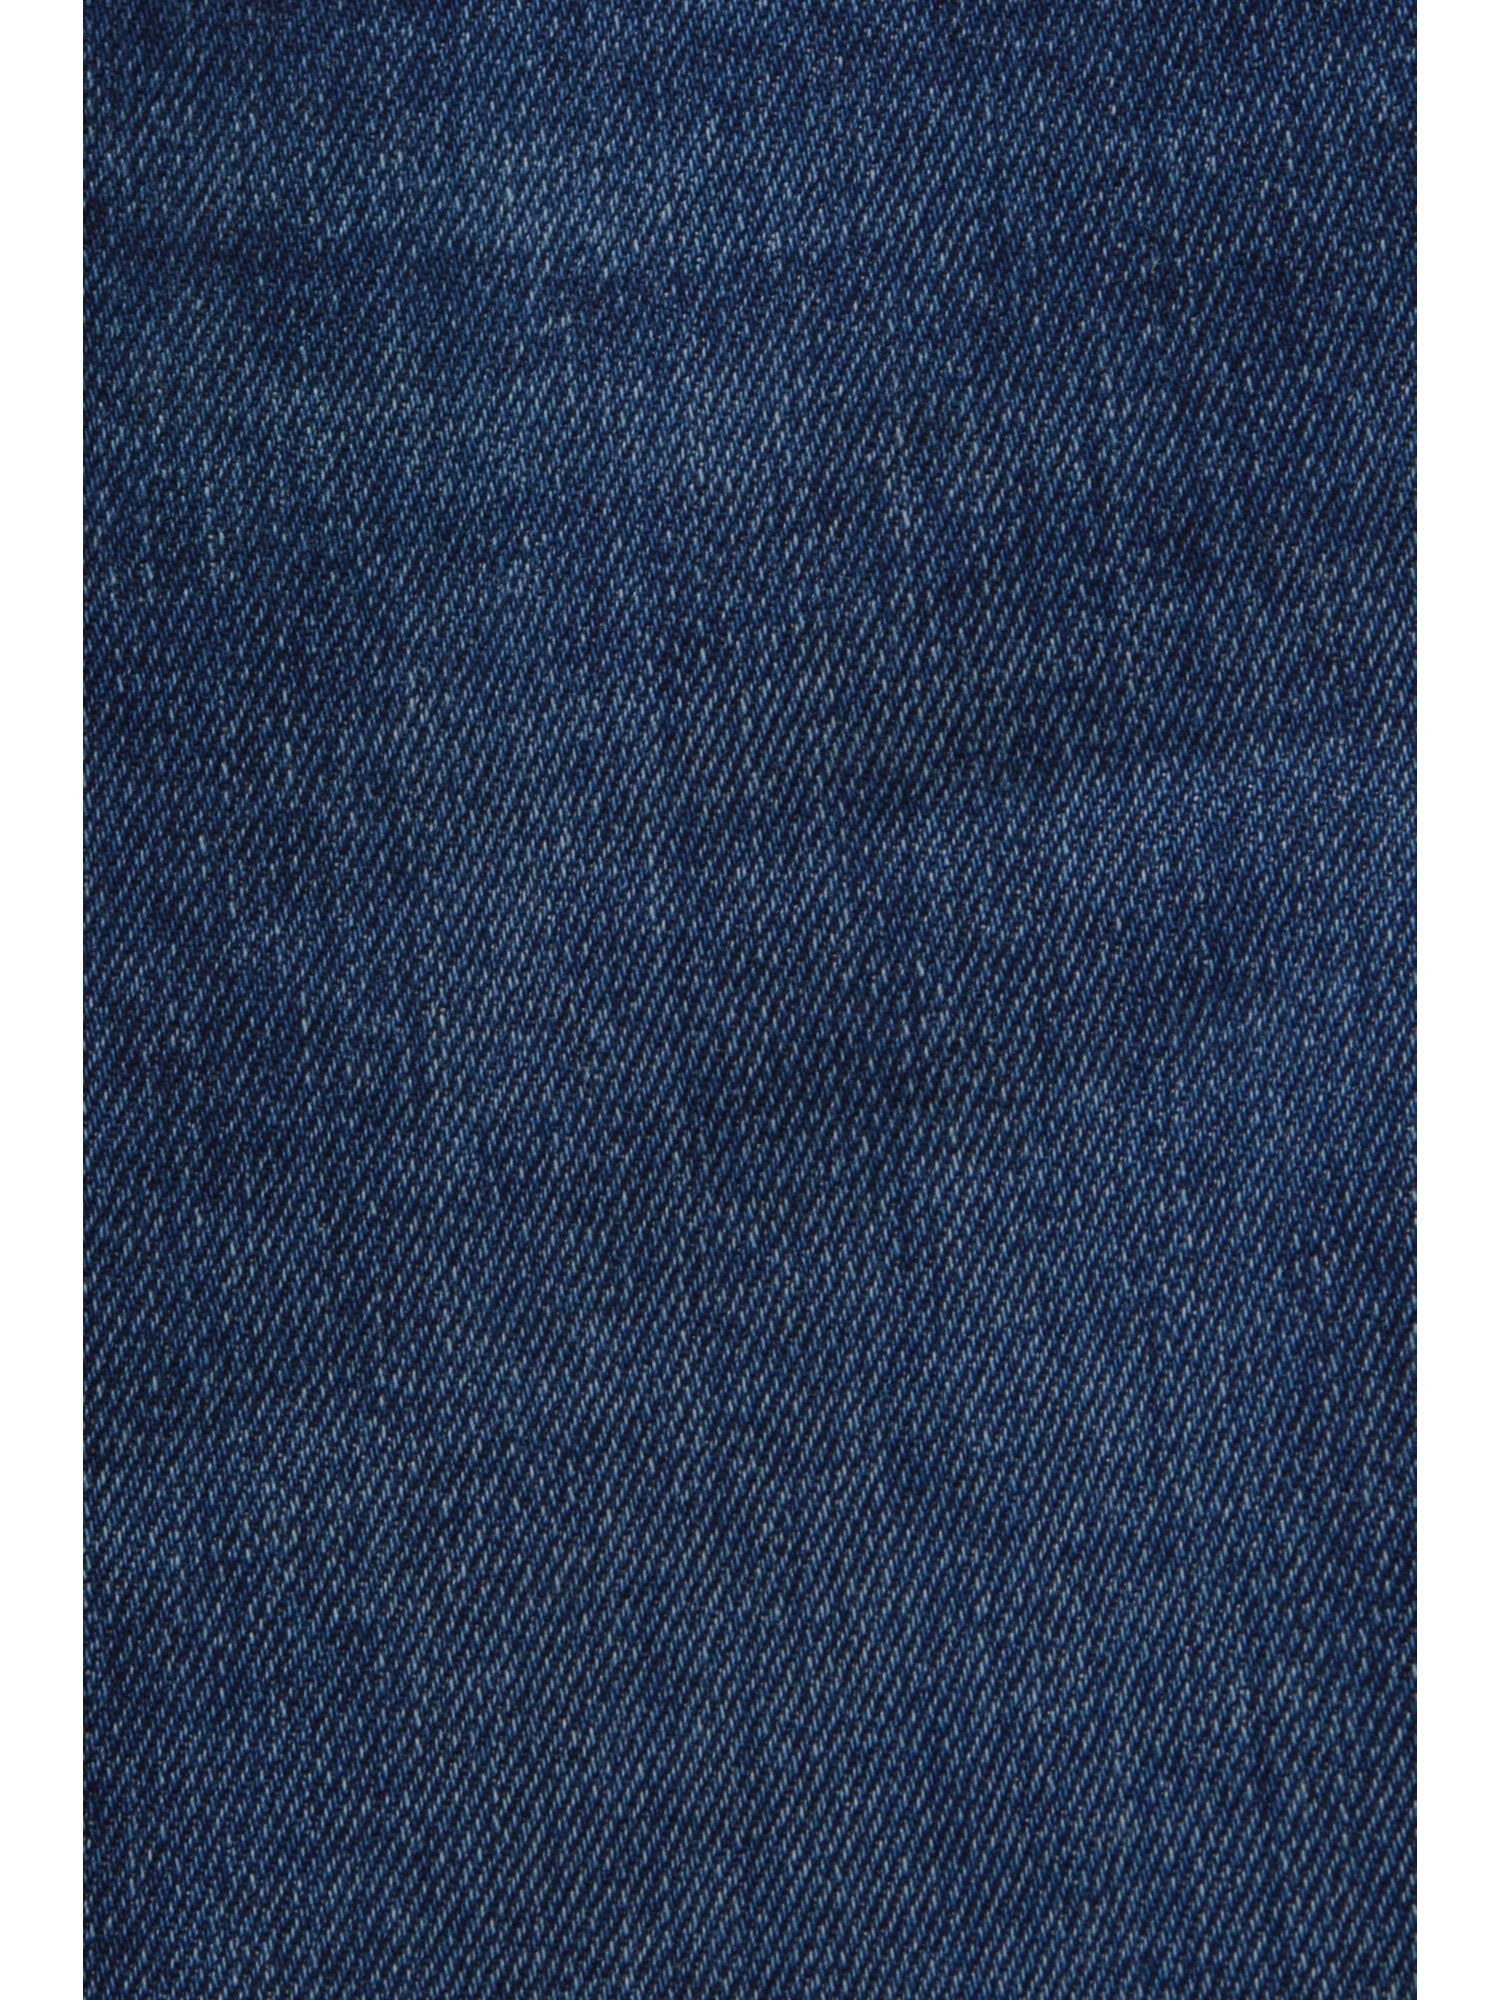 Esprit Jeans mit hohem Bequeme Bund Retro-Classic-Jeans